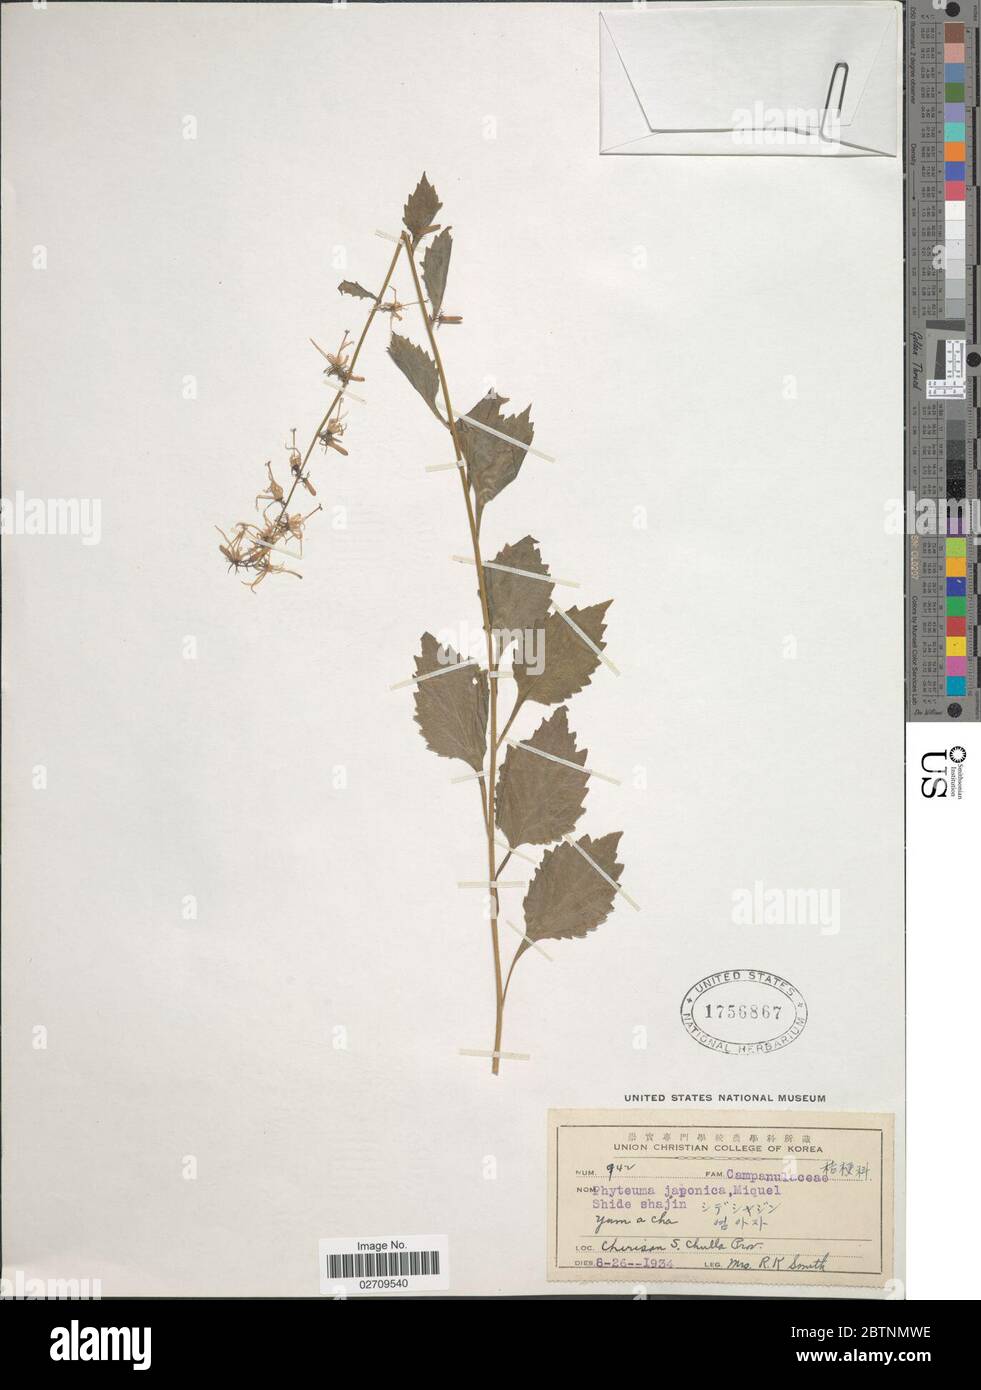 Asyneuma japonicum Wall Briq. Stock Photo